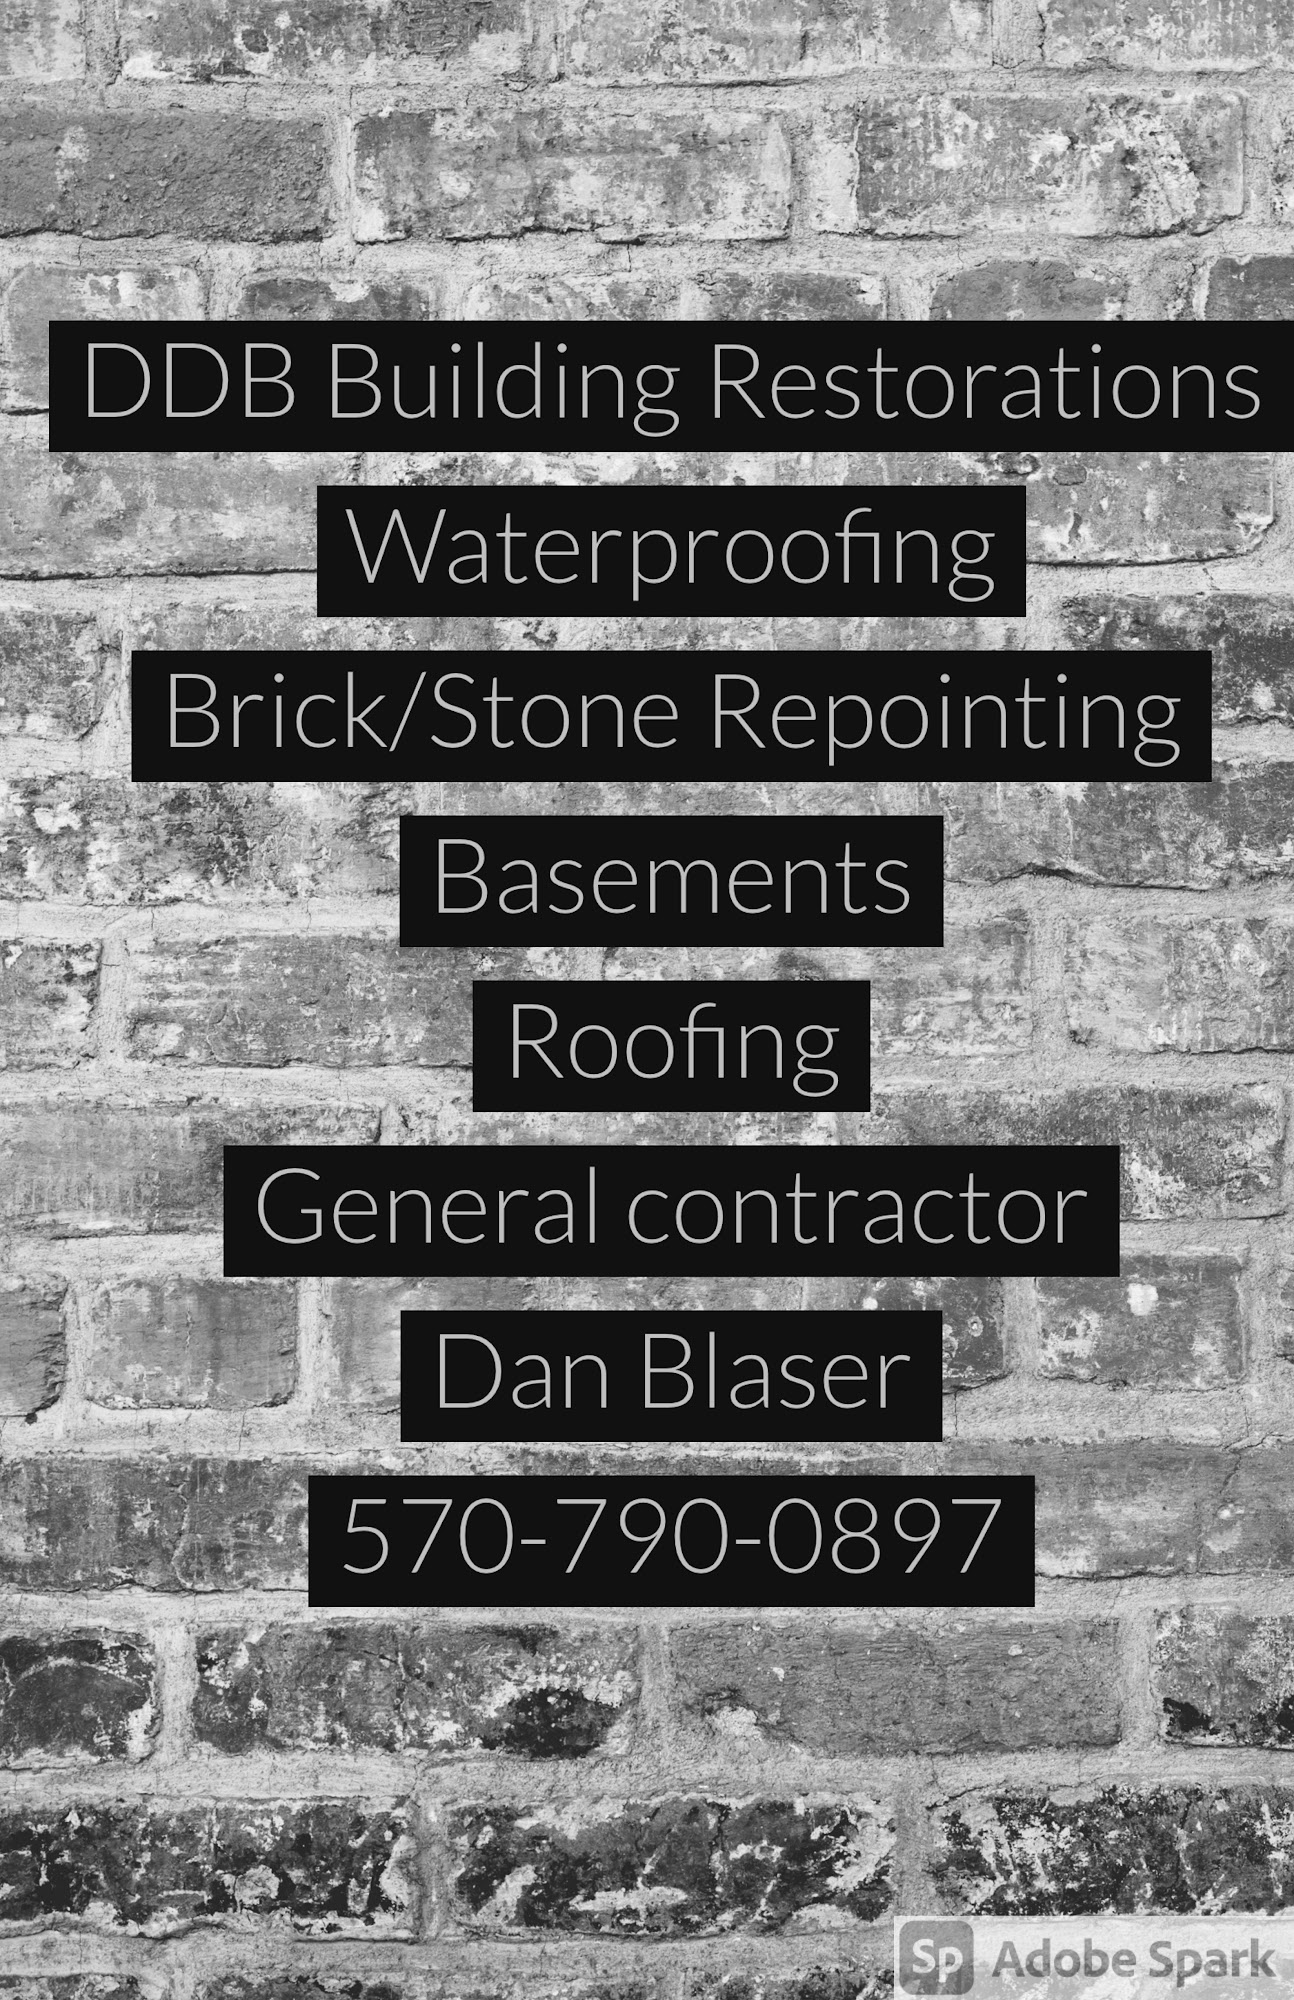 DDB Building Restorations LLC